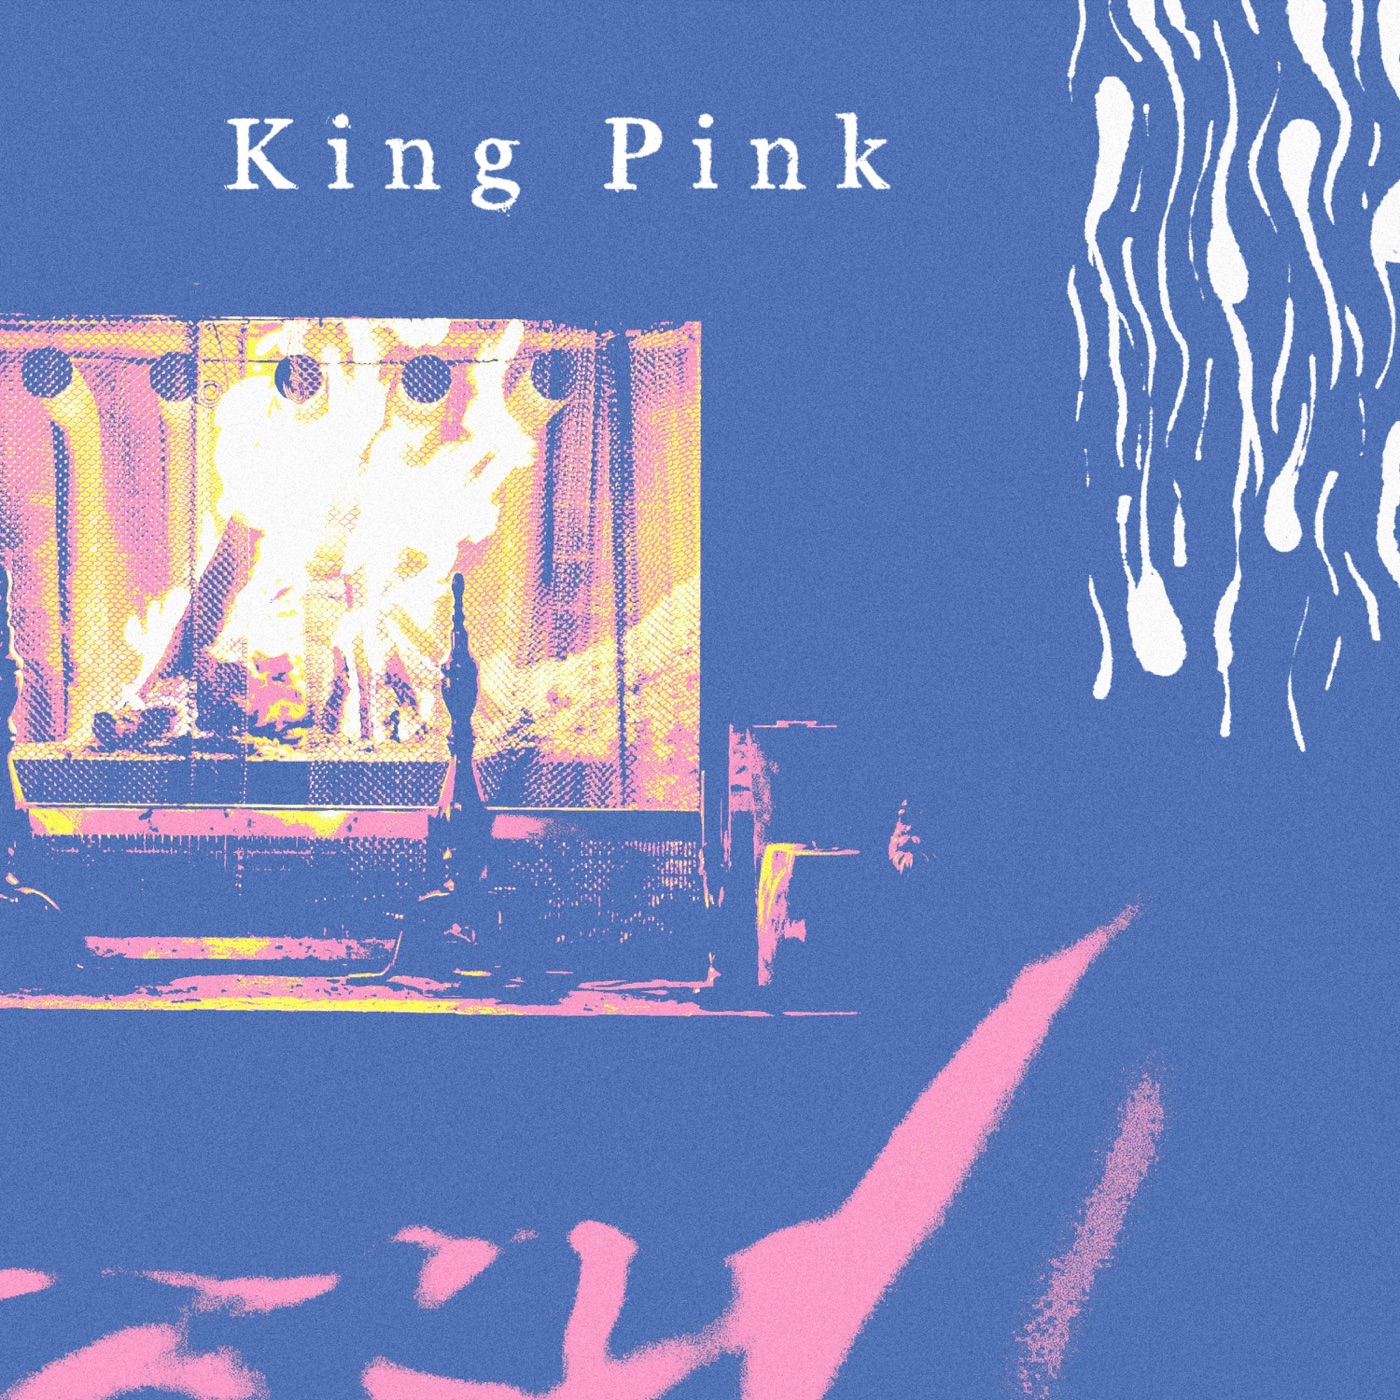 King Pink by King Pink